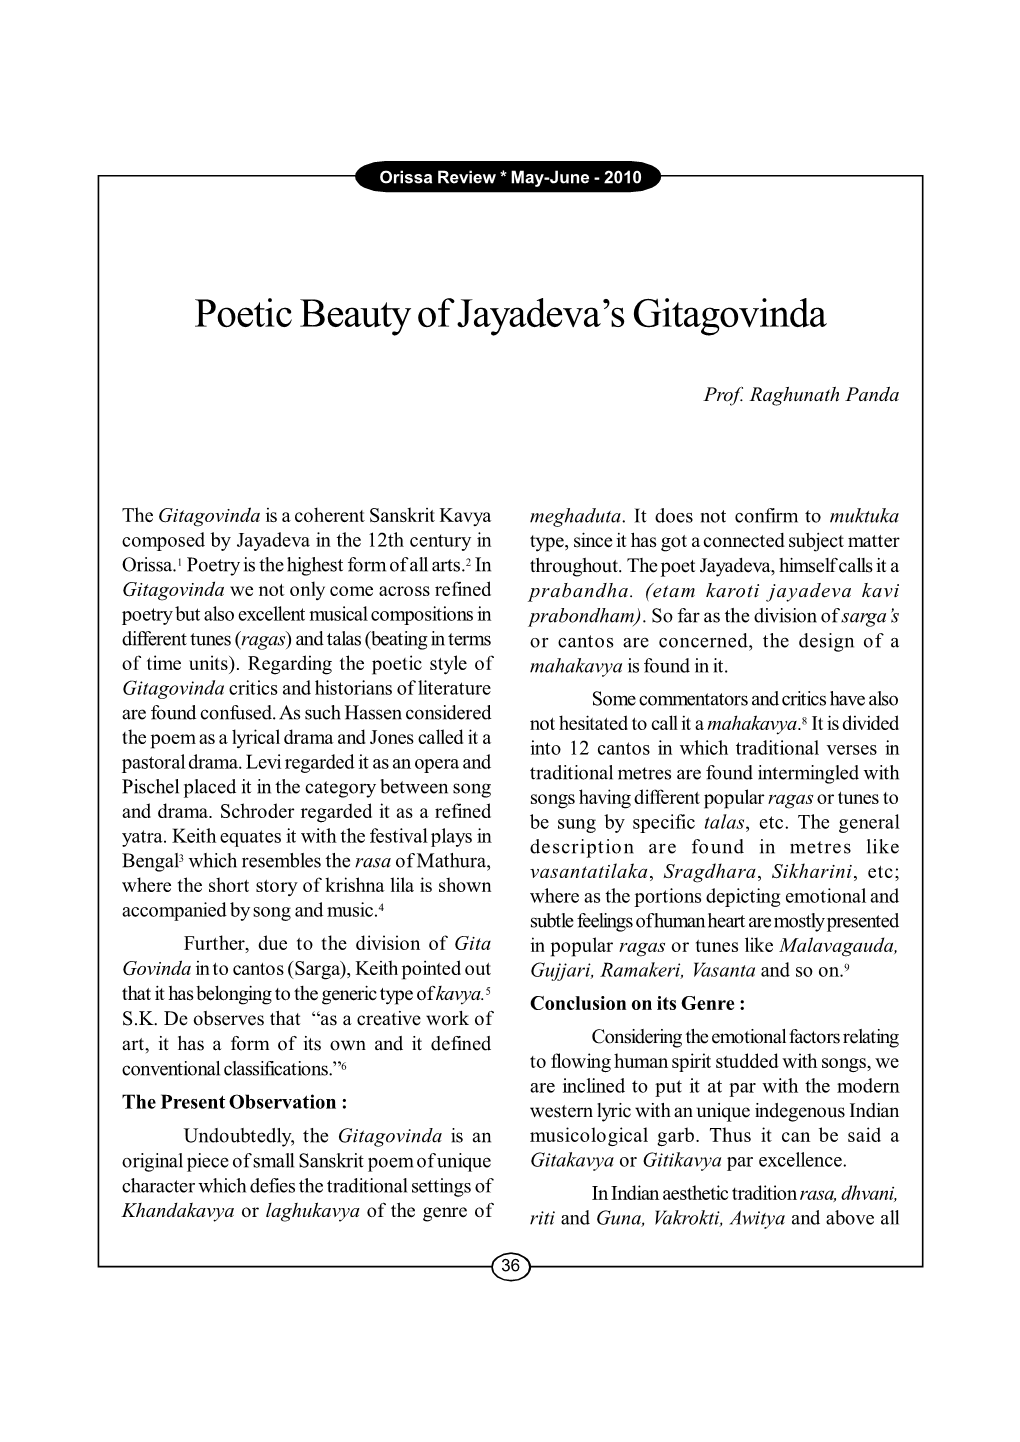 Poetic Beauty Ofjayadeva's Gitagovinda